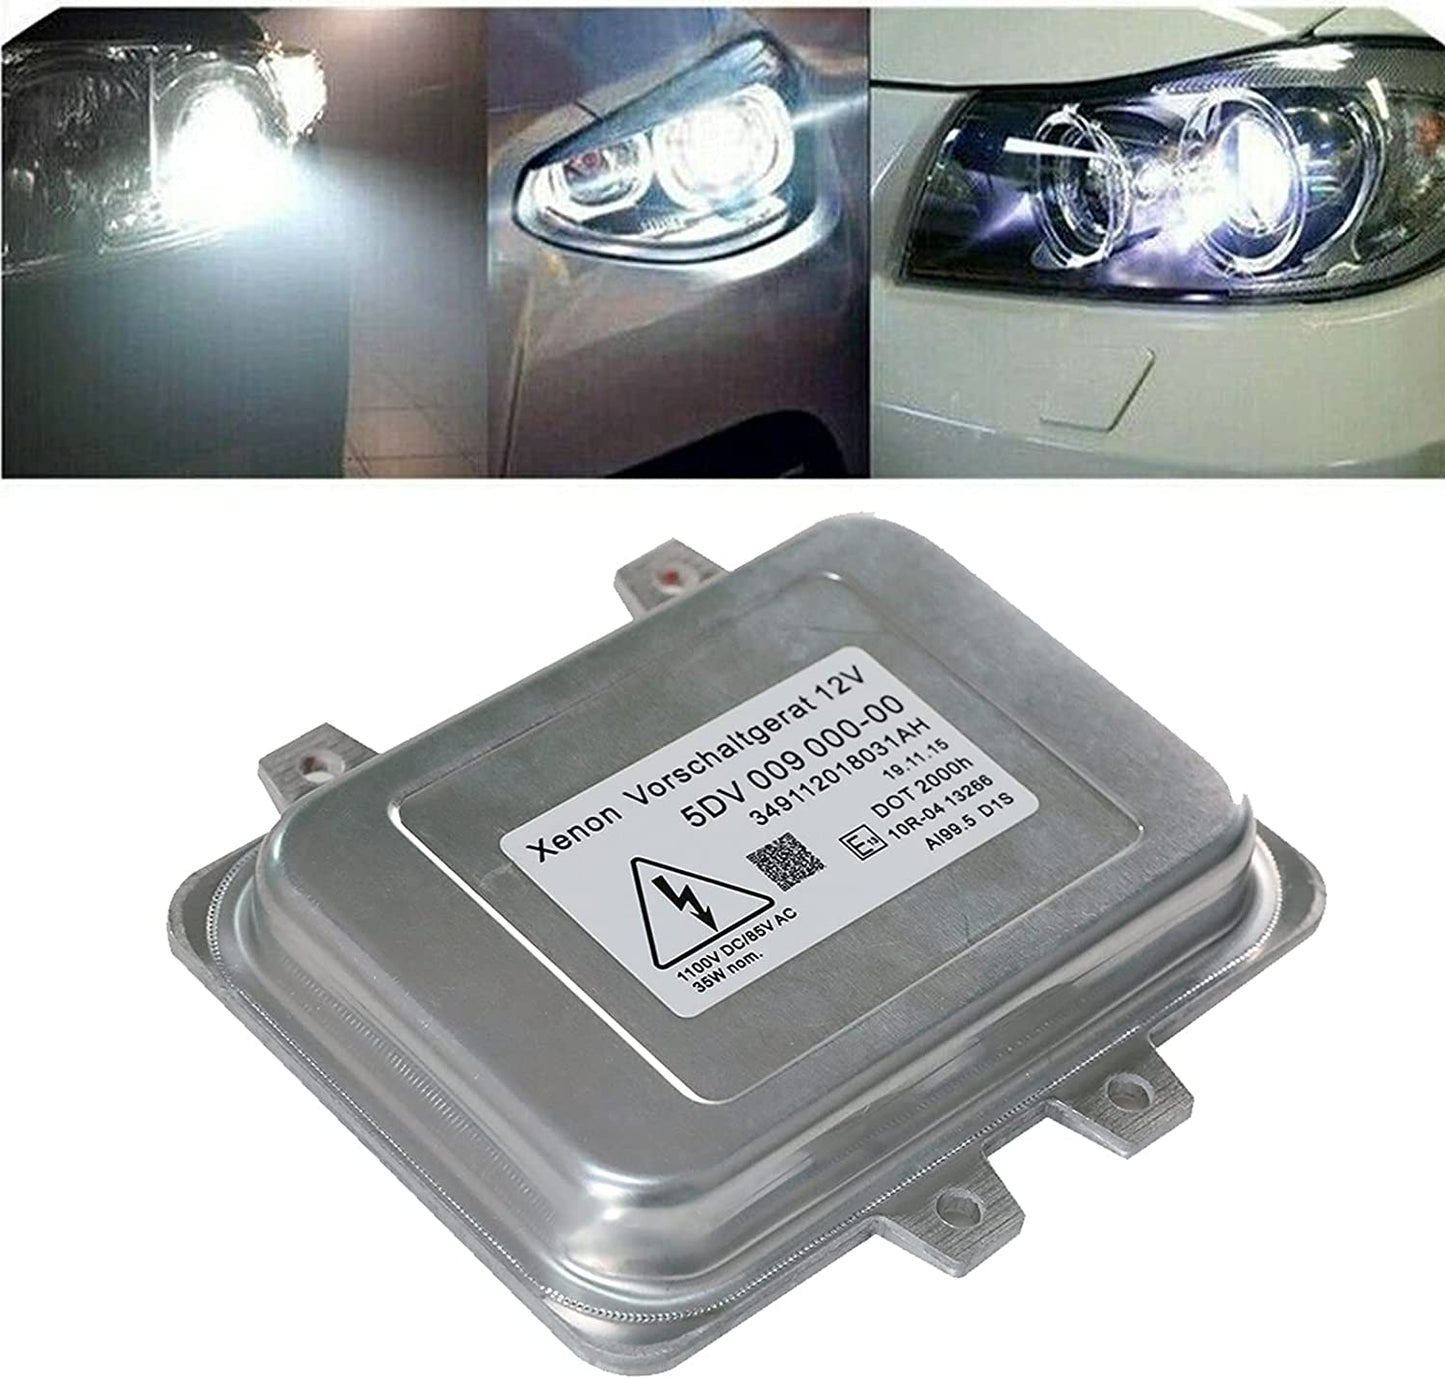 Yikesai 5DV 009 000-00 Xenon Hid Headlight Ballast Control Unit Replacement for 2007-2014 Cadillac Escalade & 2006-2009 BMW E60 & 2008-2014 Ch r ysl er Town Country (5dv 009 000-00)